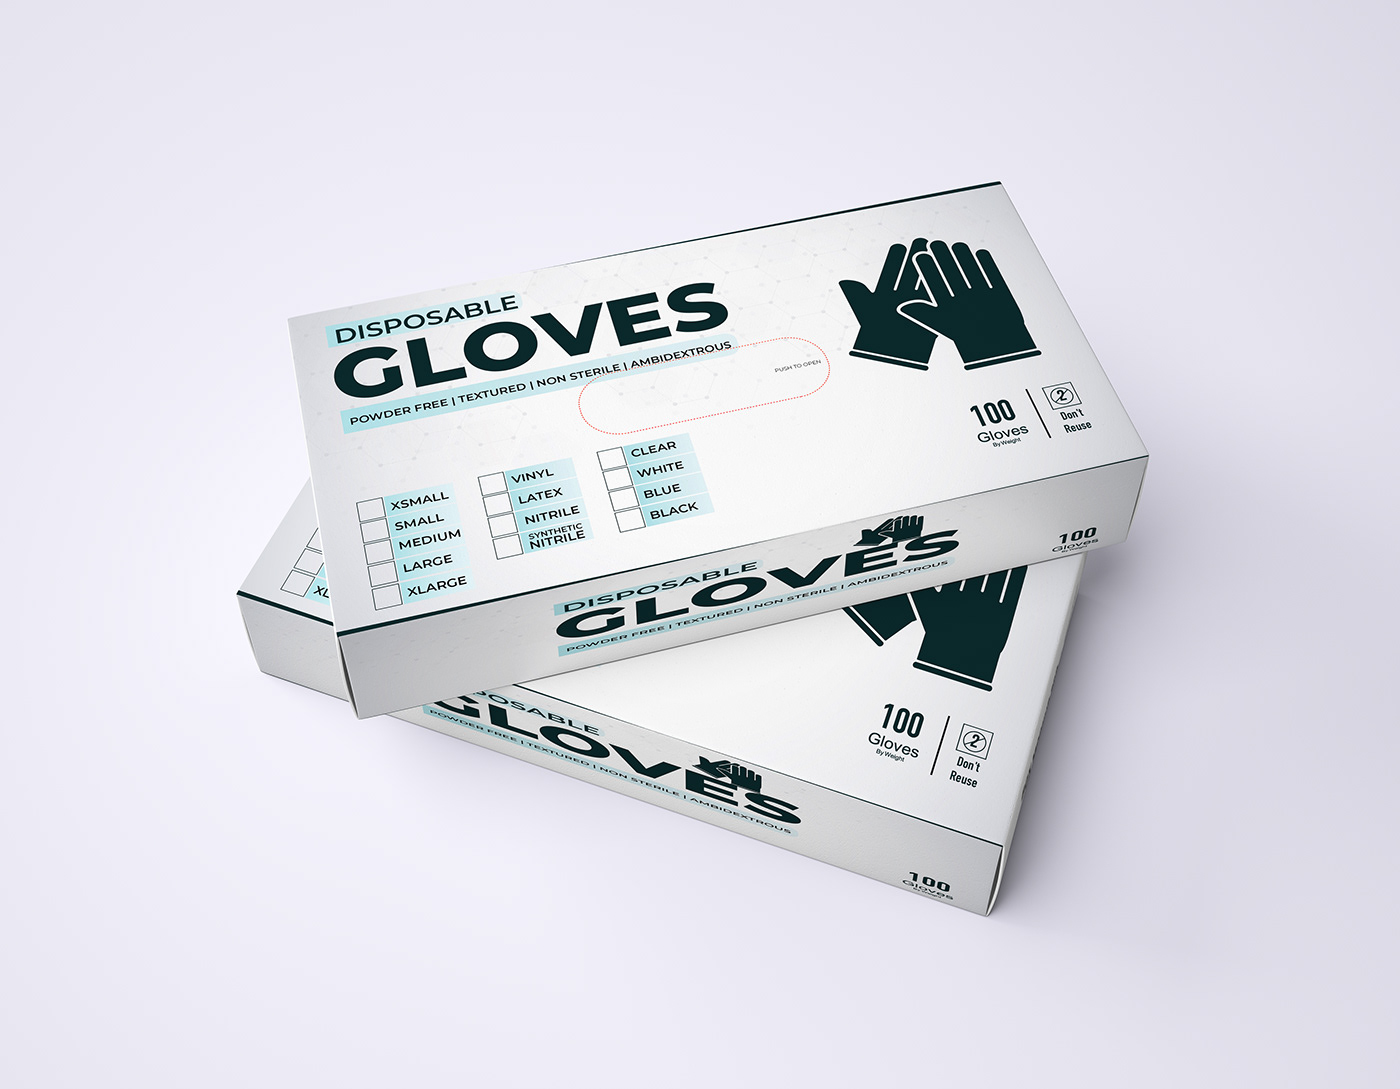 gloves nitrile vinyl latex powder free medical small medium large